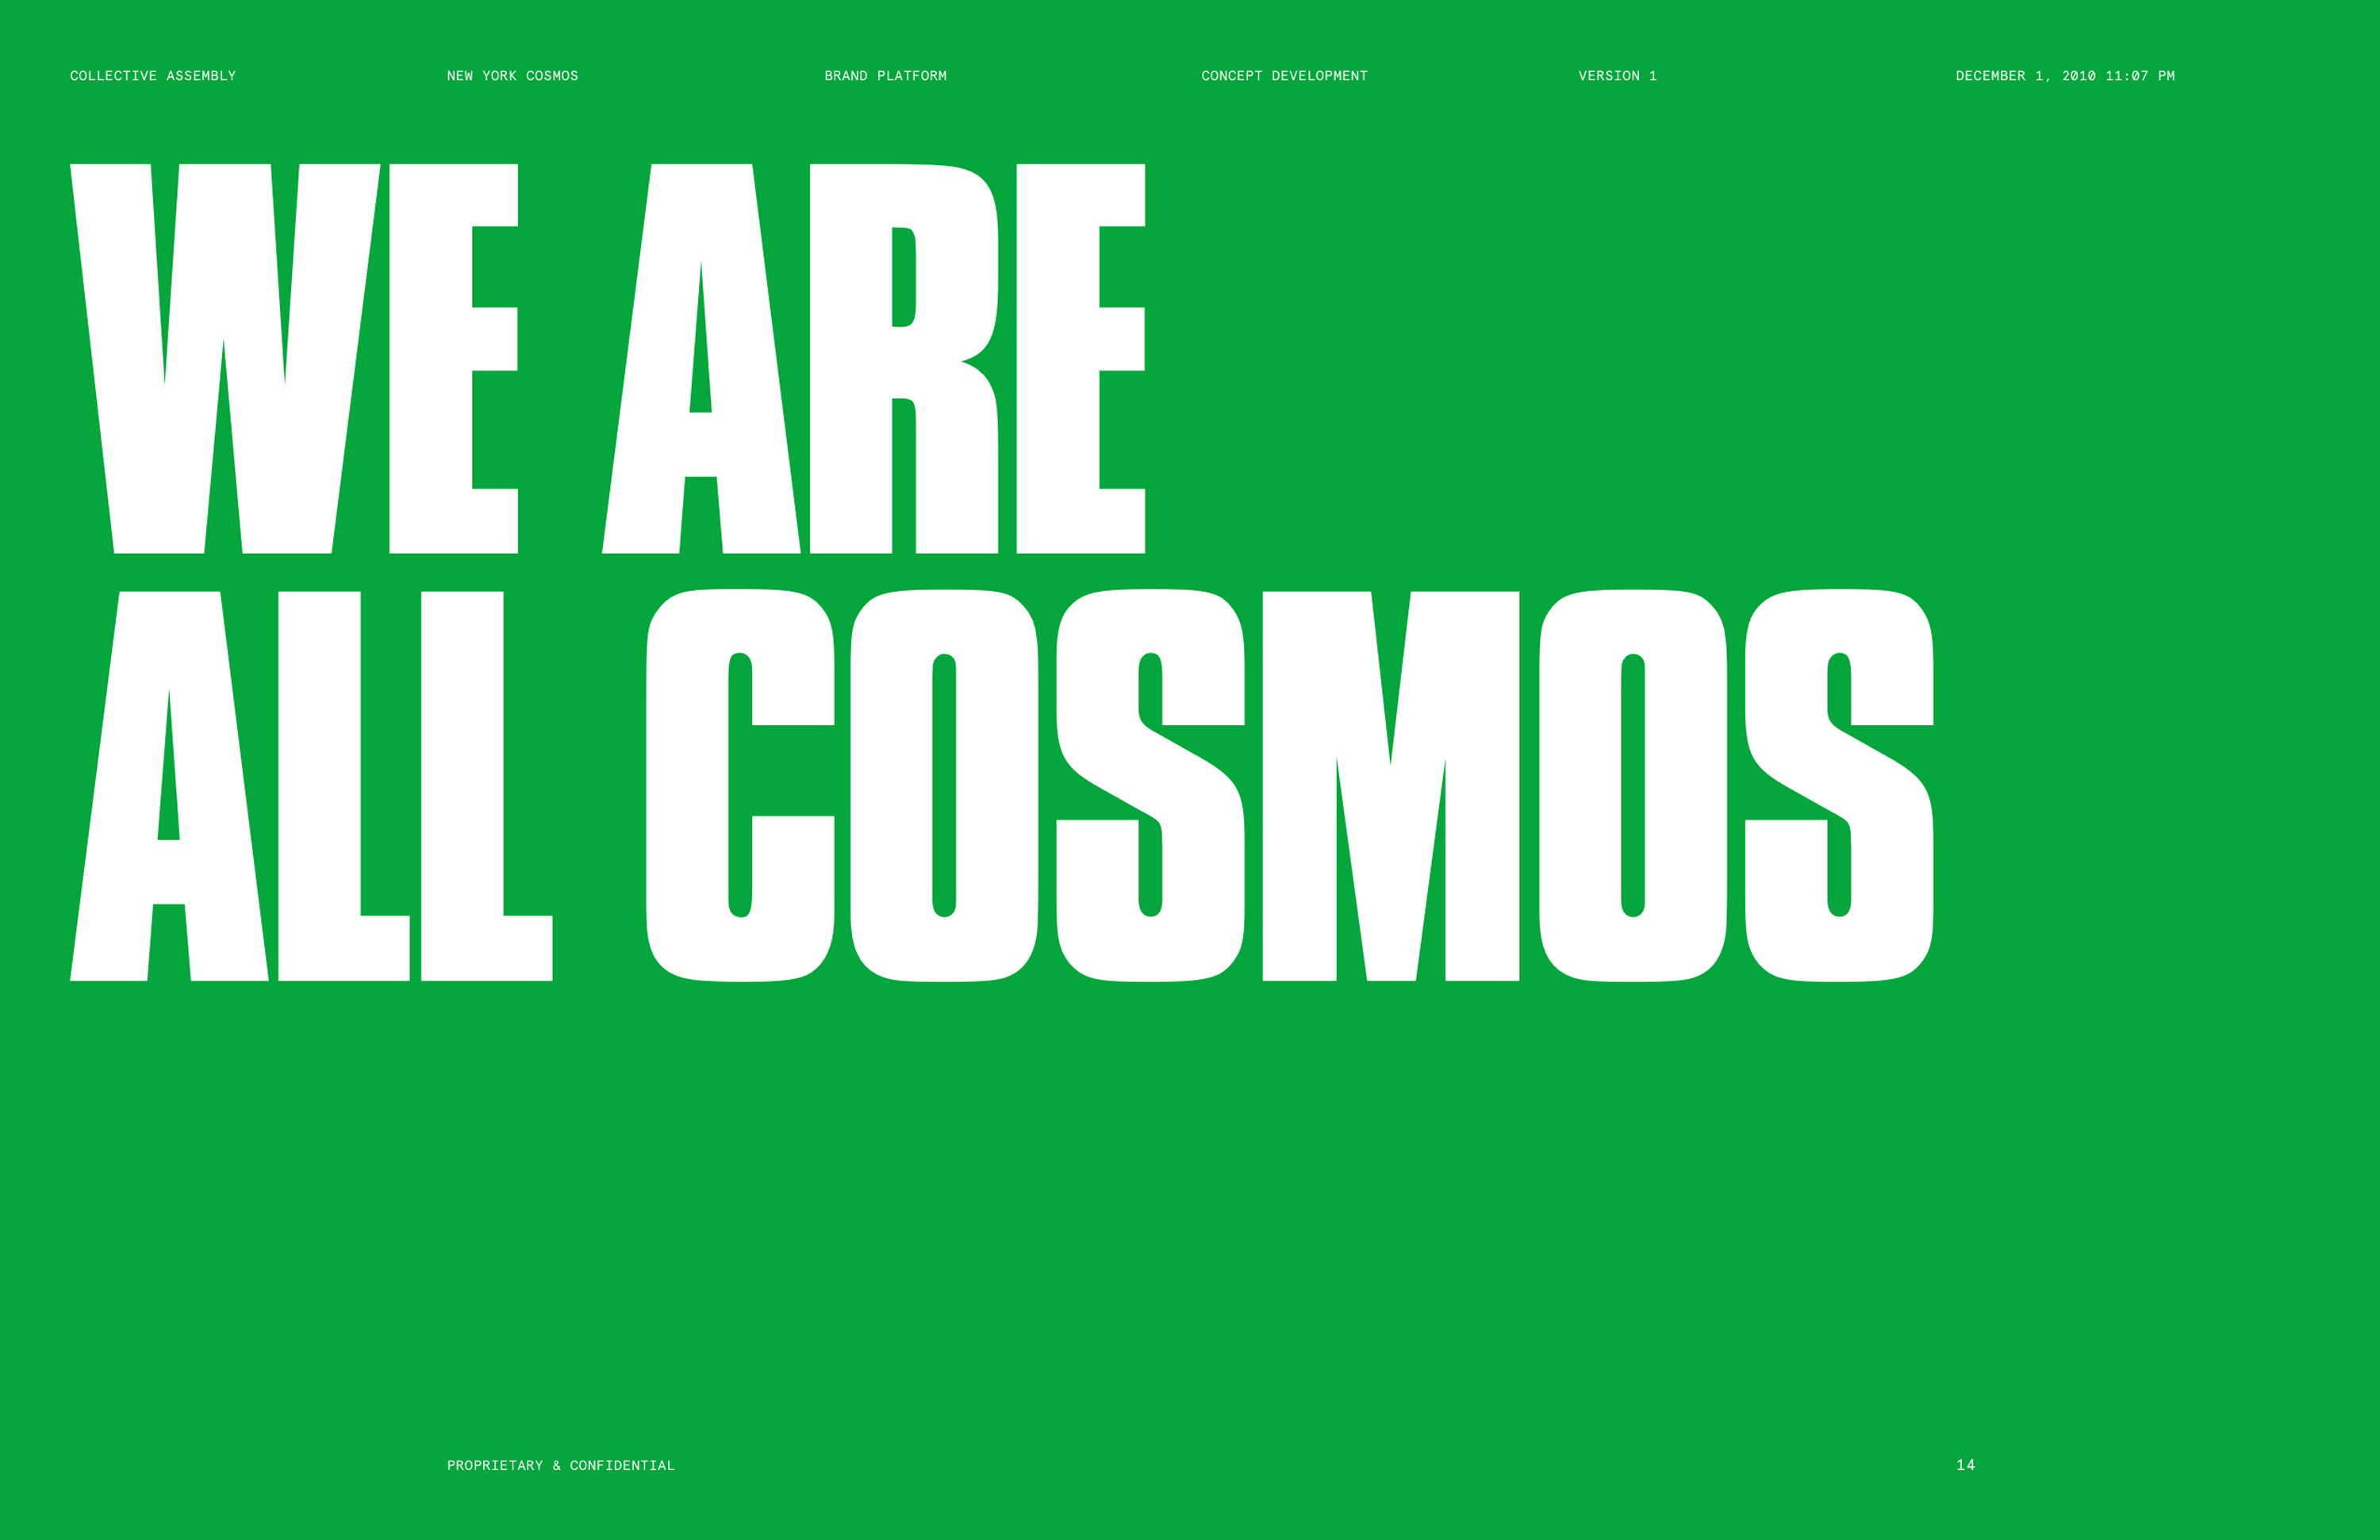 New York Cosmos / Cantona